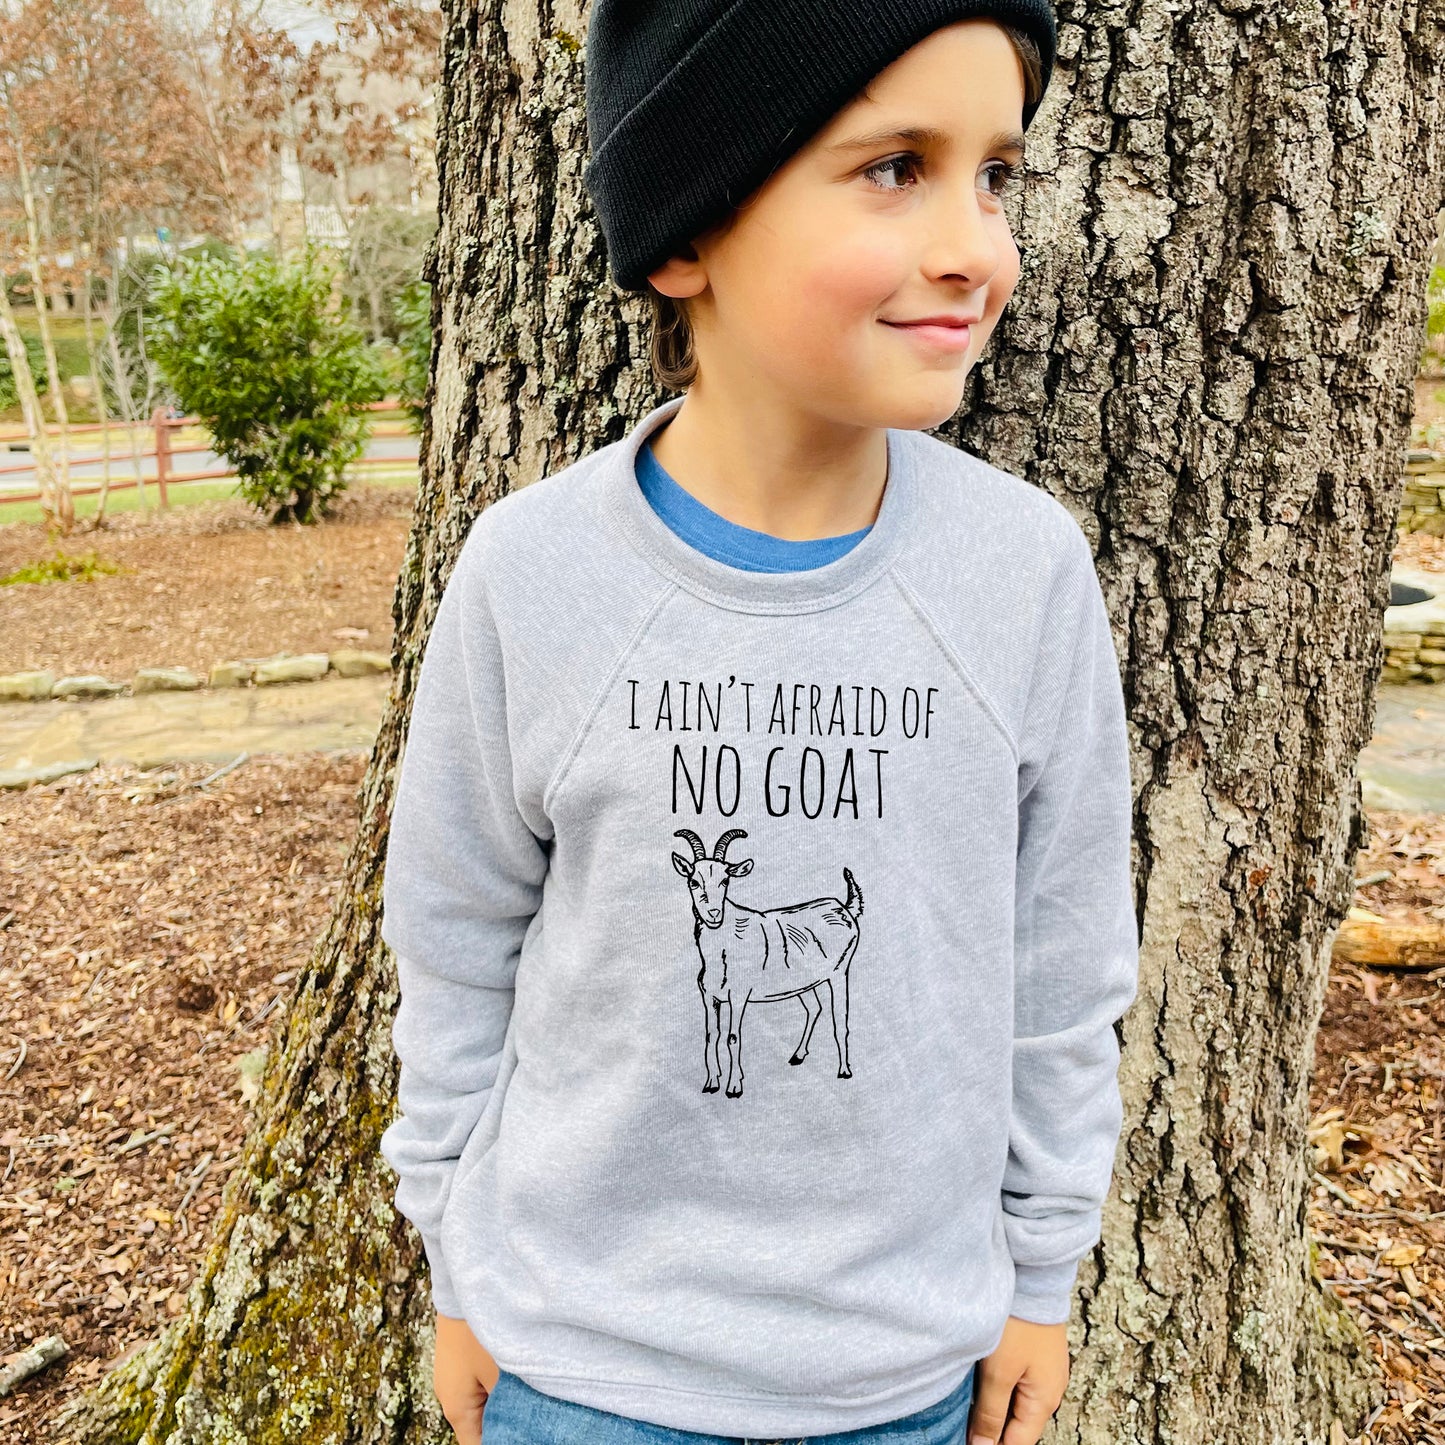 I Ain't Afraid of No Goat - Kid's Sweatshirt - Heather Gray or Mauve